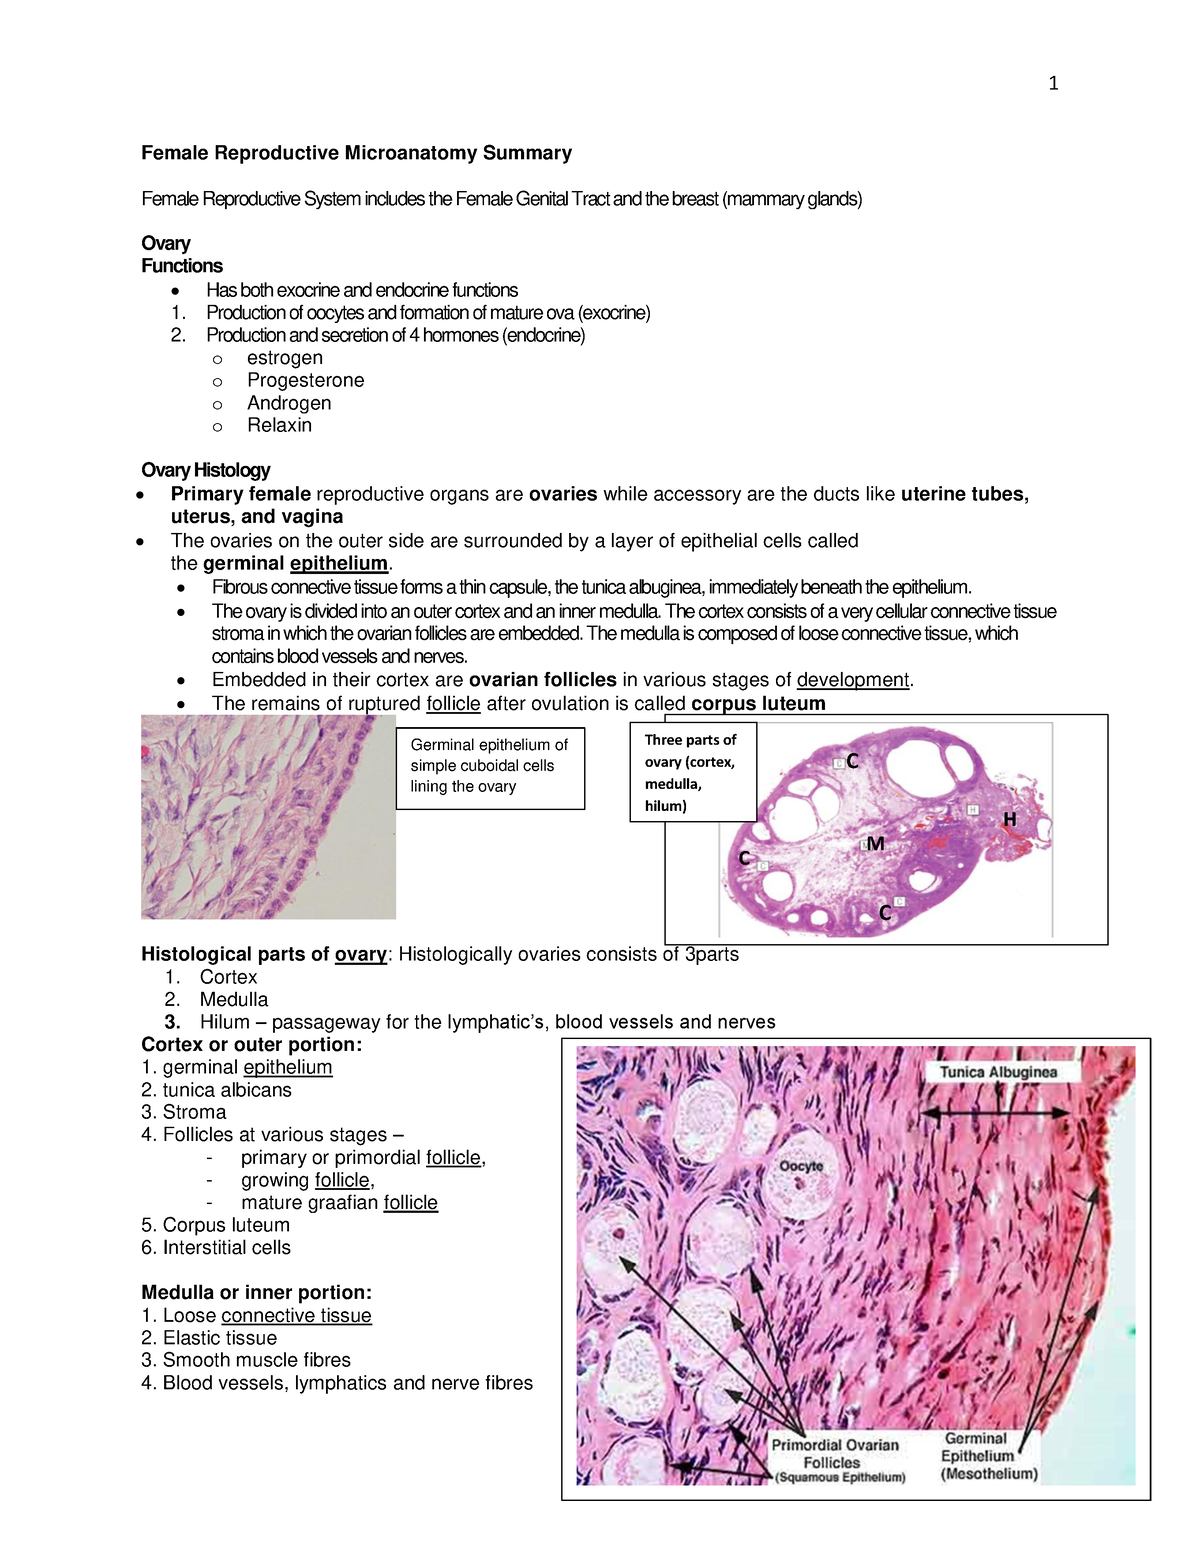 Female Reproductive Microanatomy Summary 1 - Female Reproductive ...